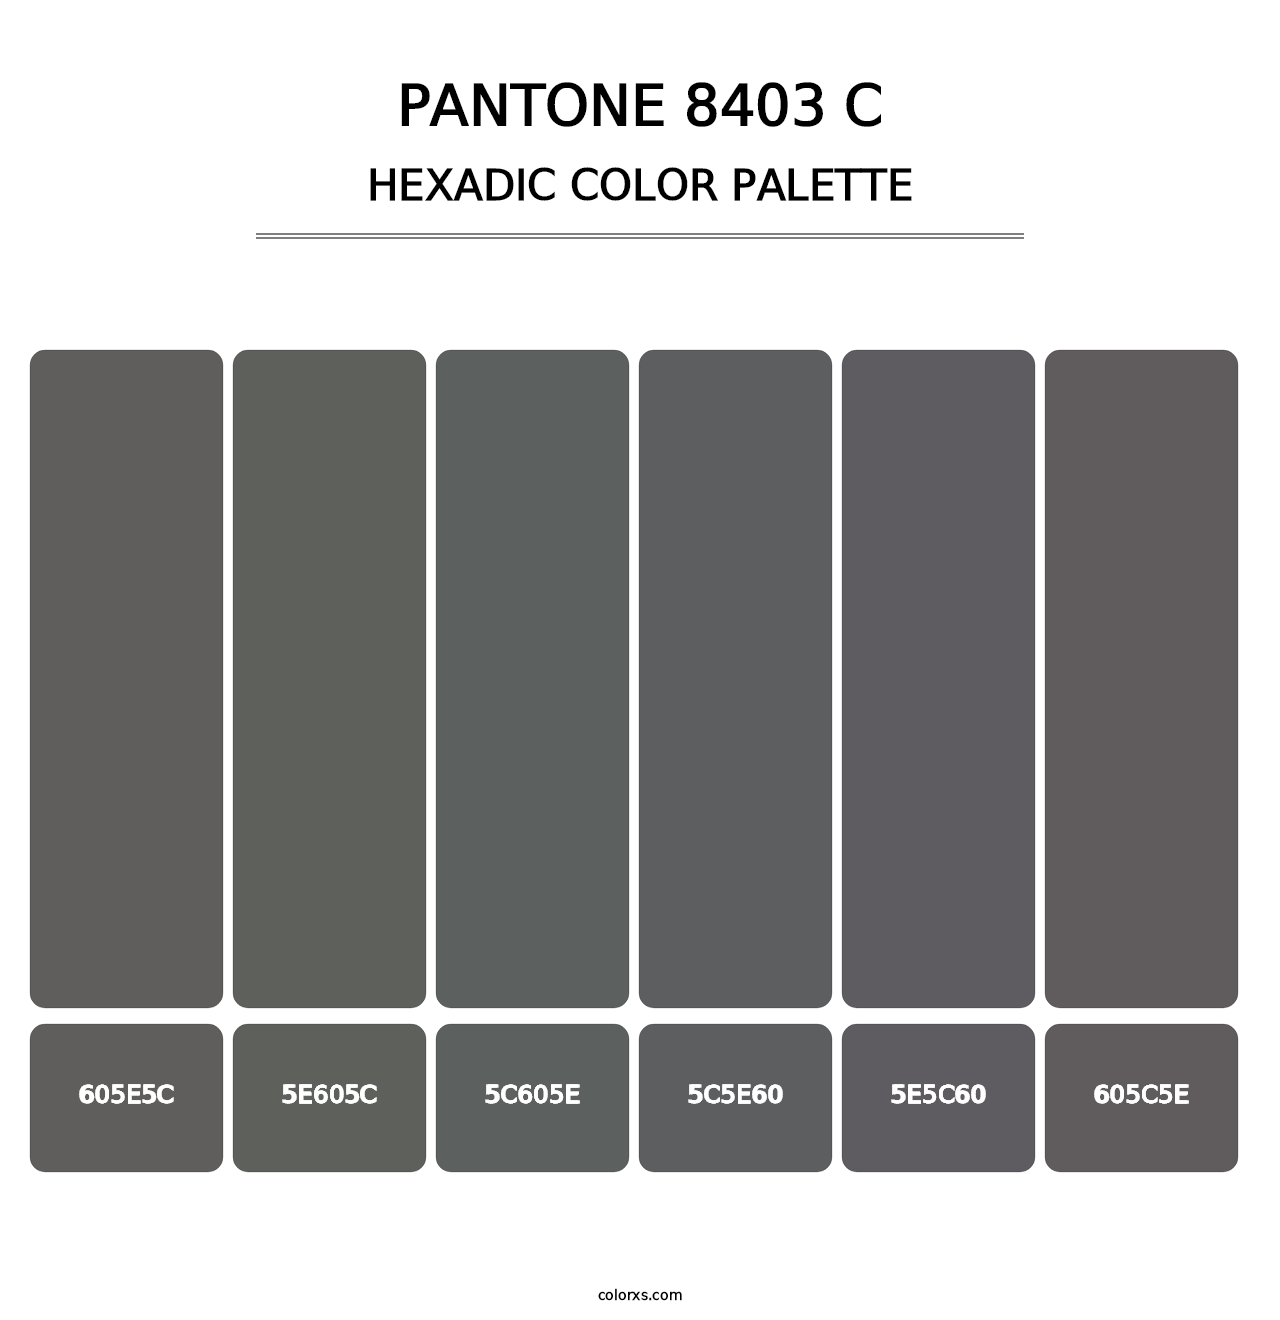 PANTONE 8403 C - Hexadic Color Palette